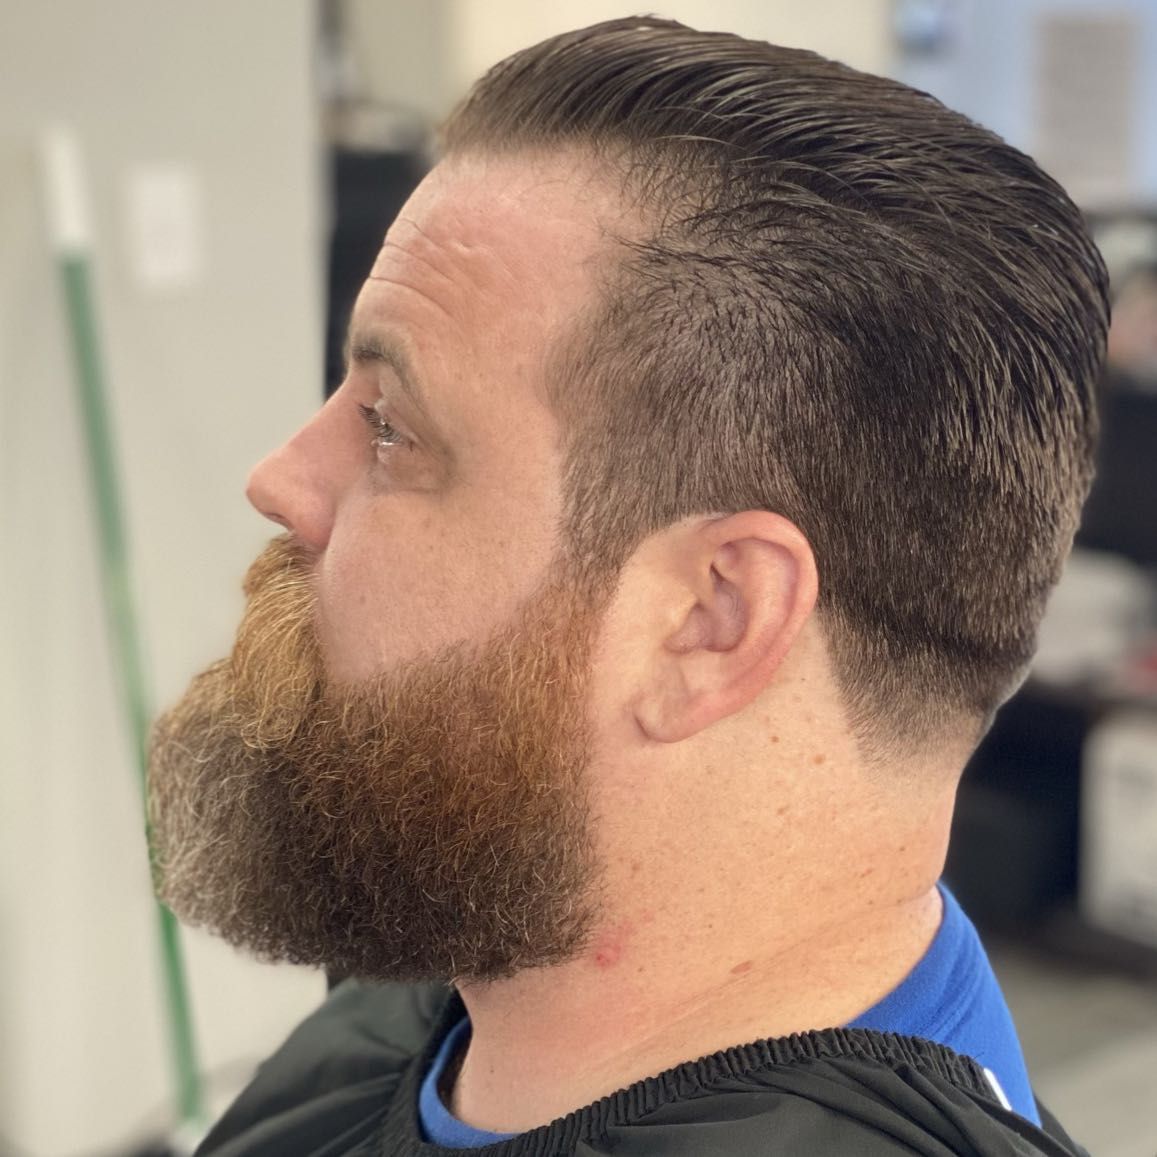 Haircut (not bald) and beard portfolio